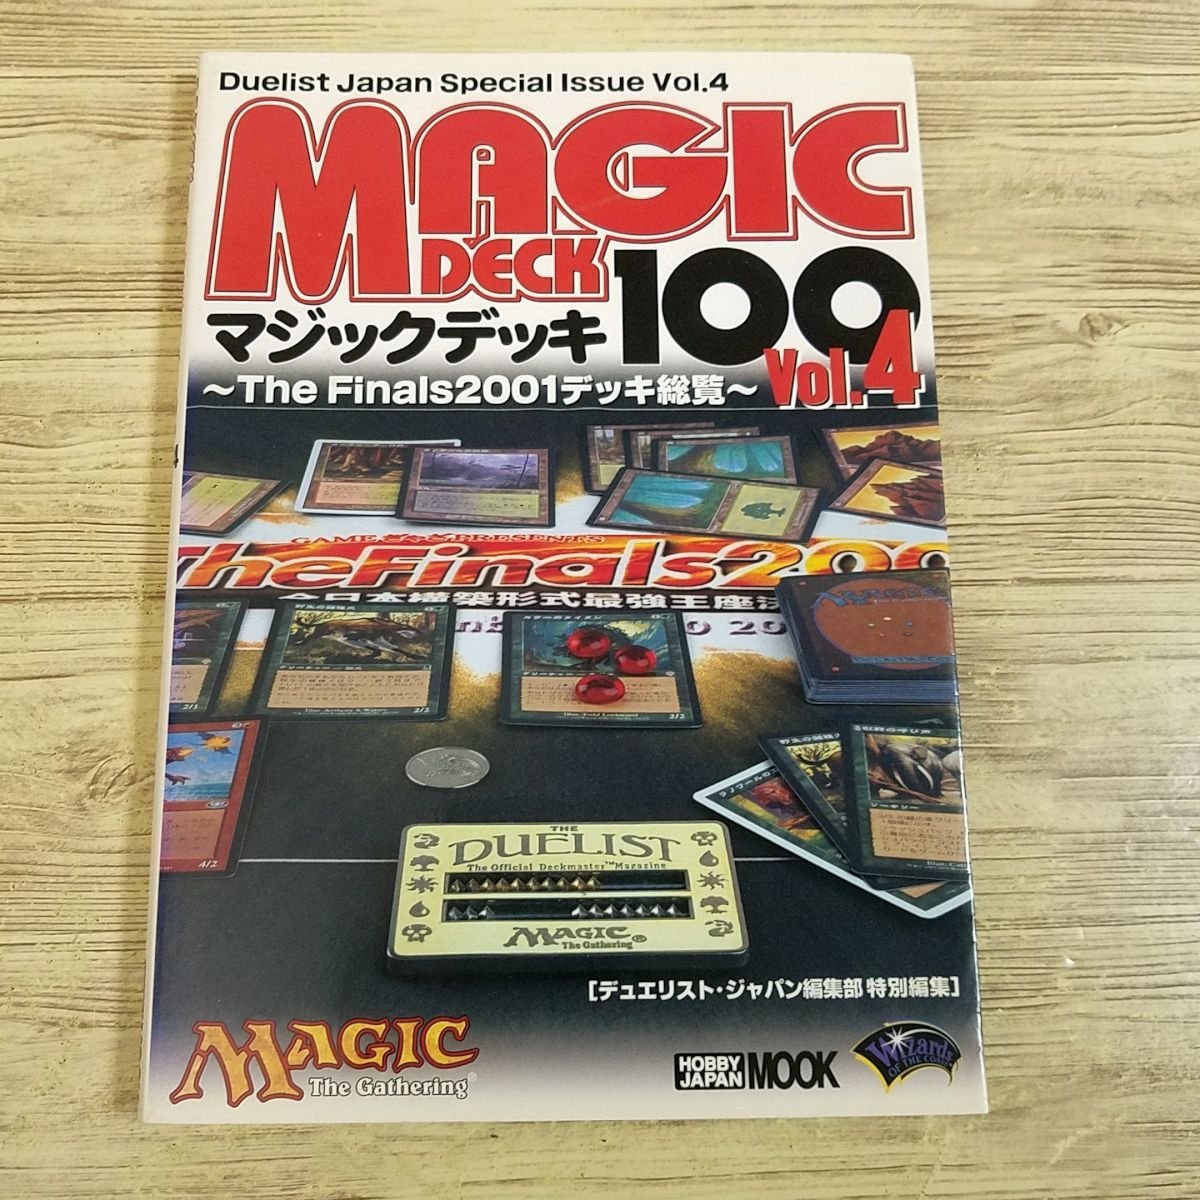 TCG relation [ Magic deck 100 Vol.4 The Finals2001 year deck total viewing ] hobby Japan te. Ellis to* Japan [ postage 180 jpy ]